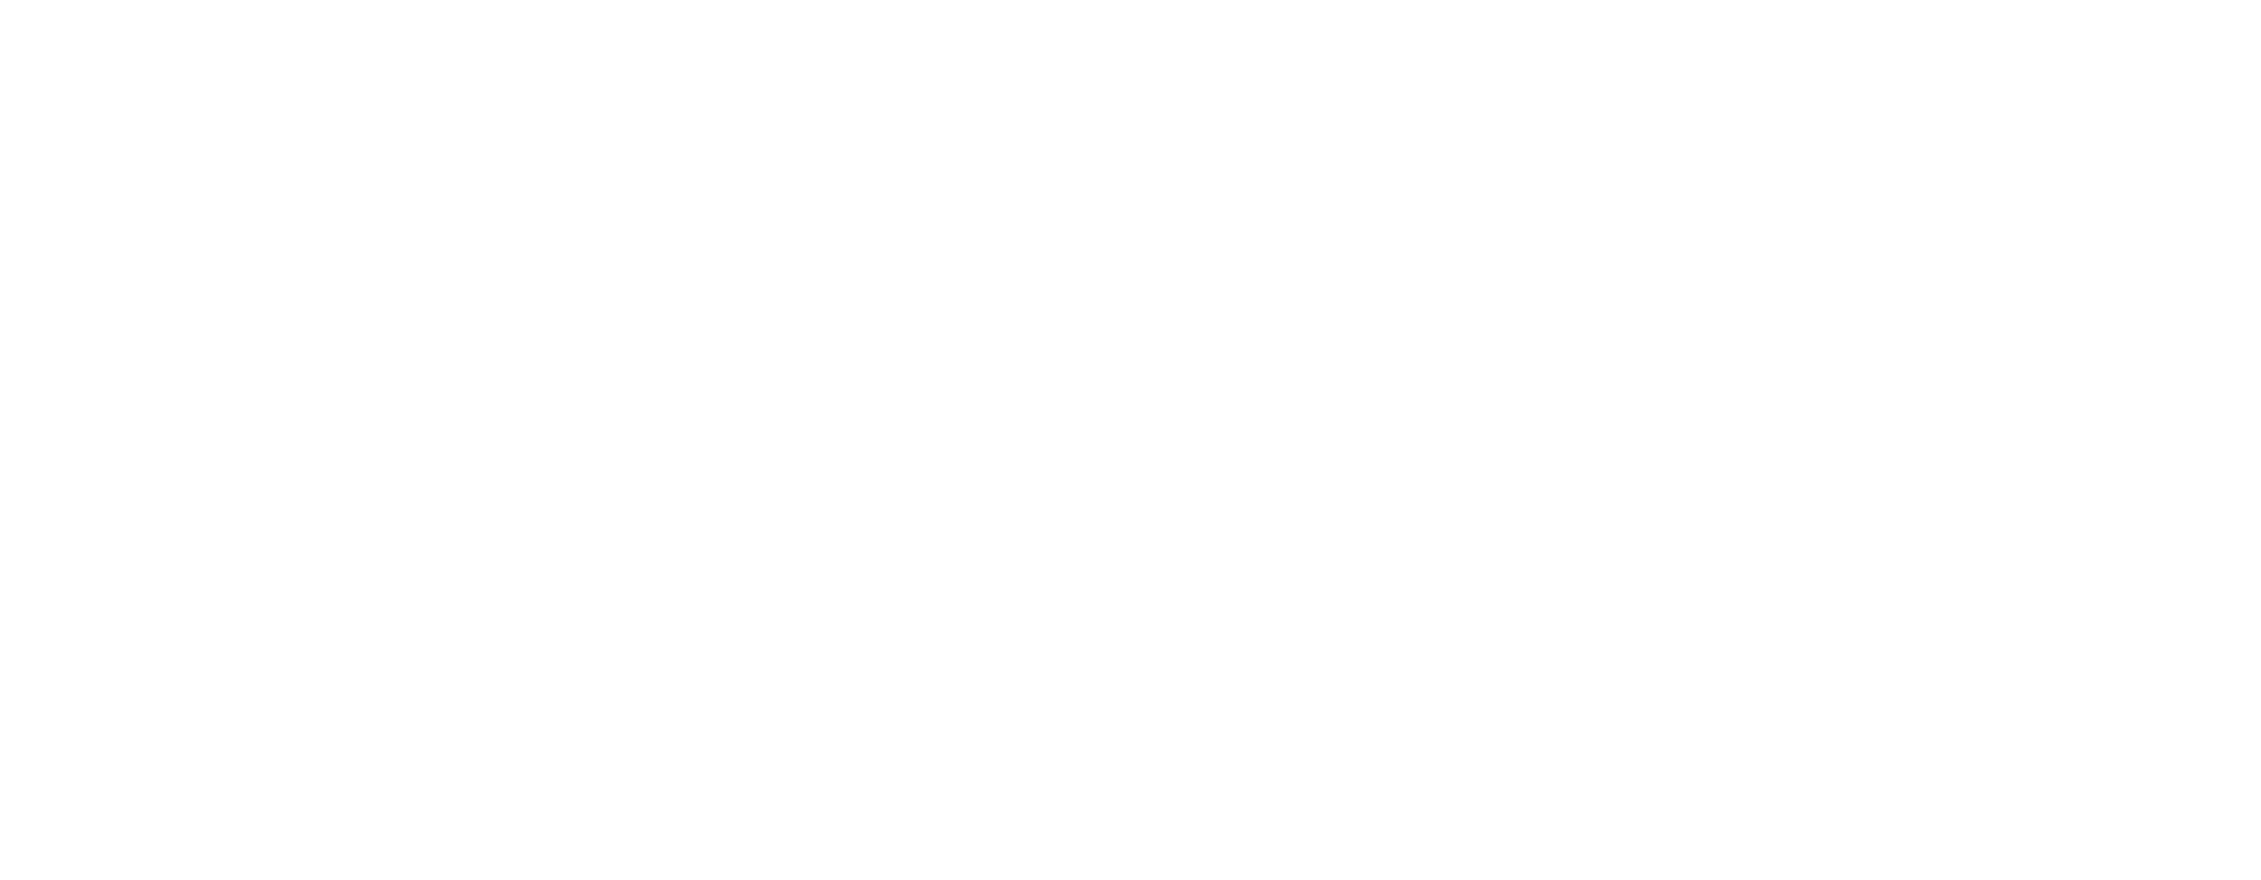 Logo Edison Teleriscaldamento